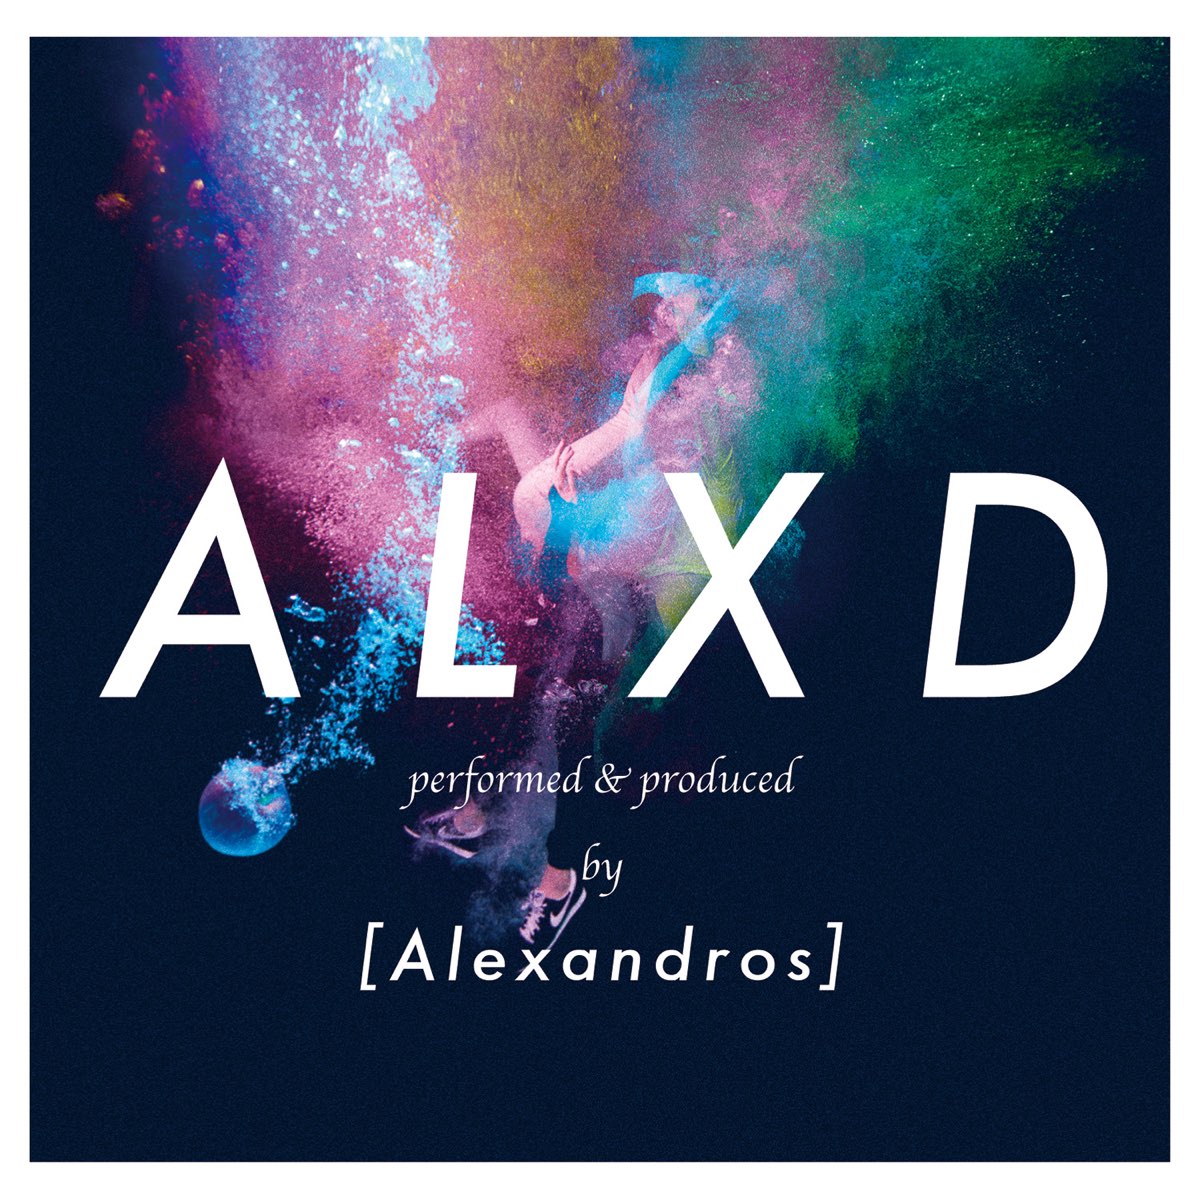 ALXD - Album by [Alexandros] - Apple Music